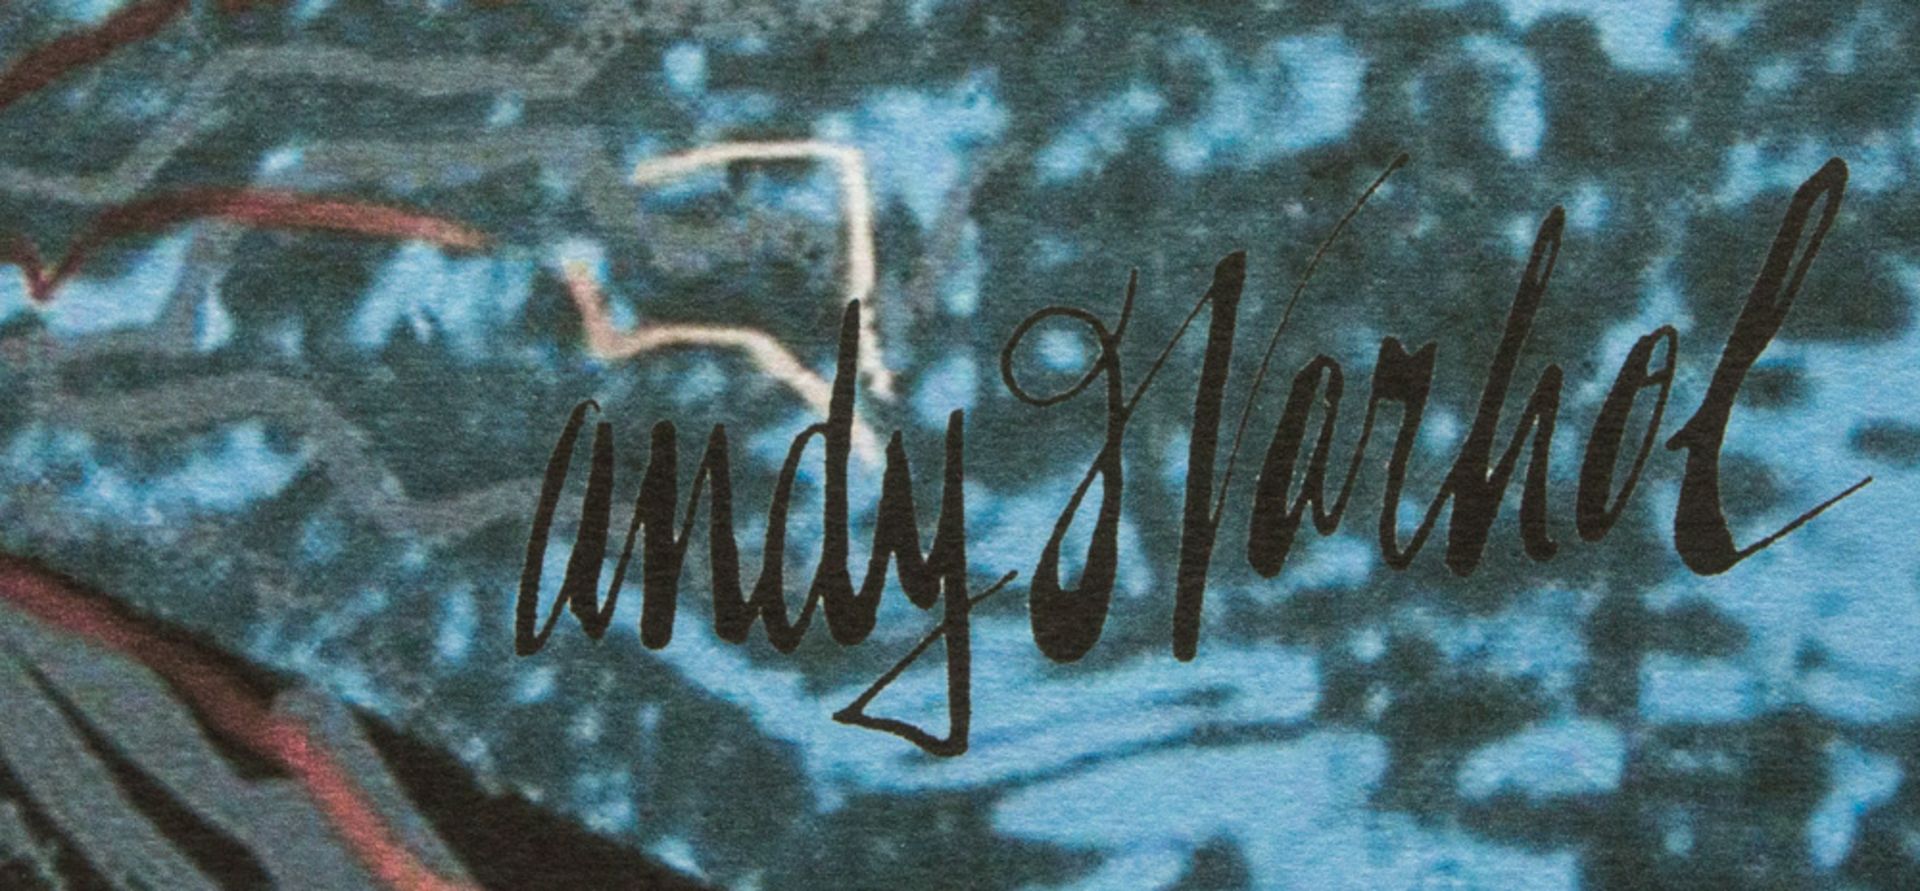 Andy Warhol 'Moonwalk' - Image 2 of 4